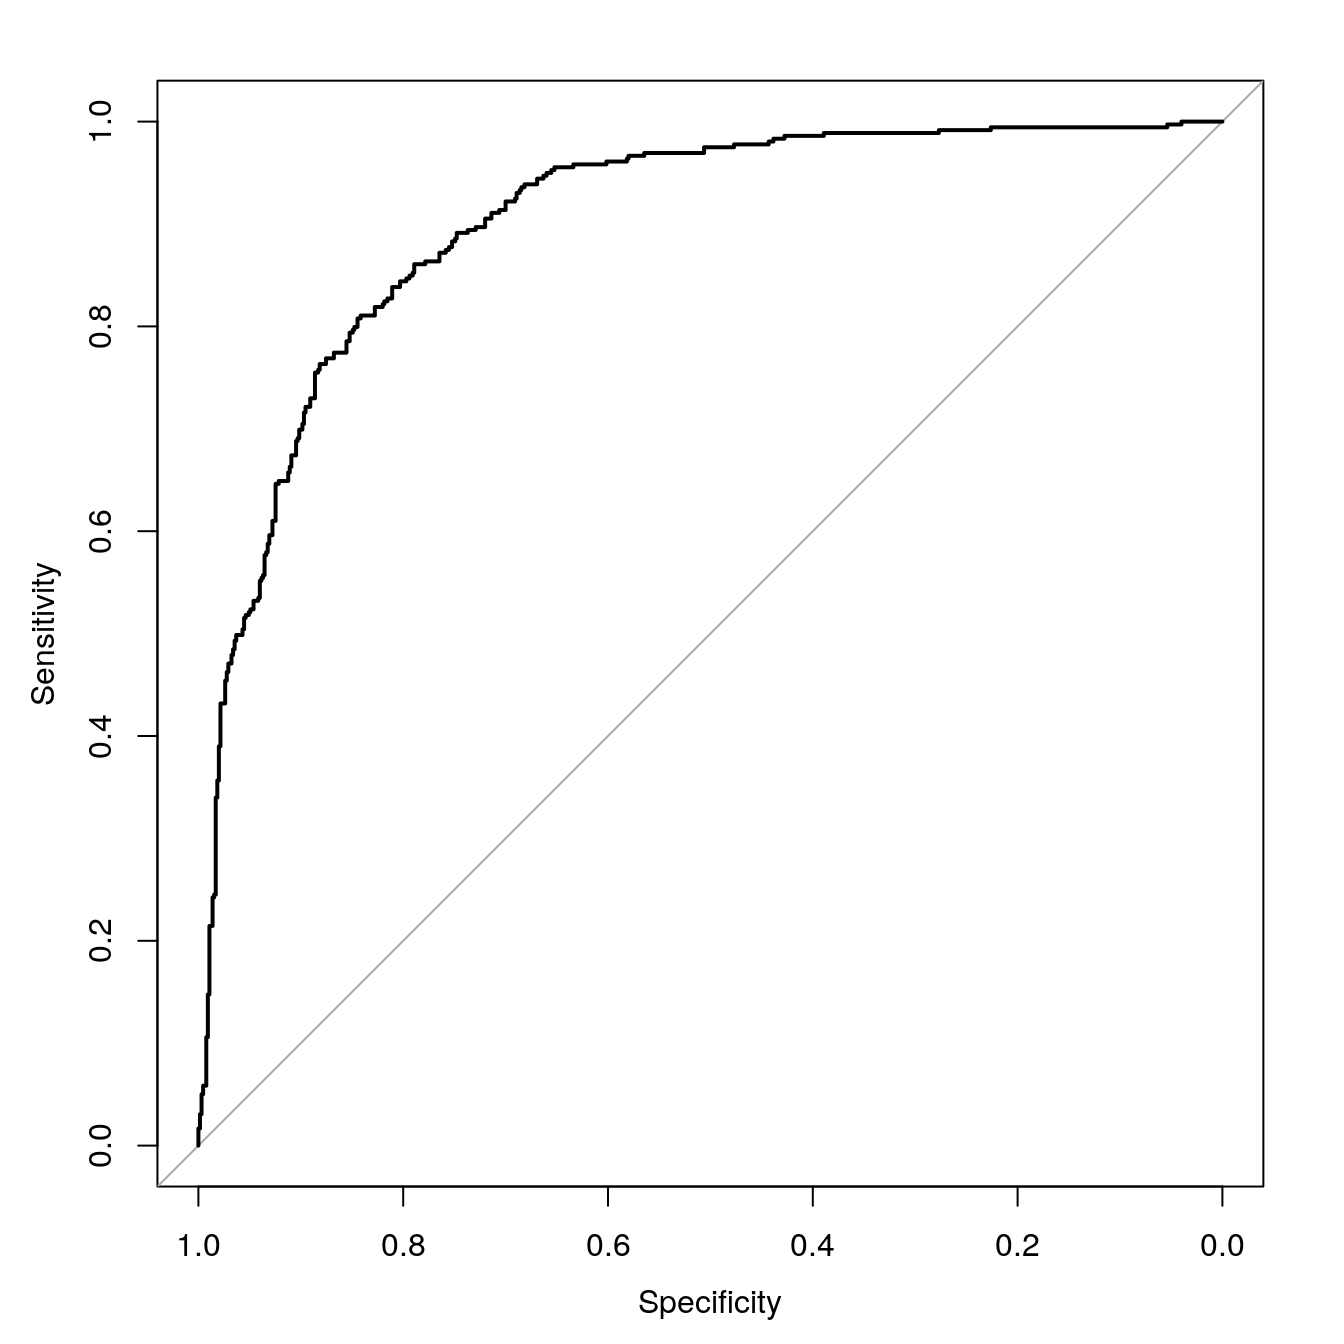 rf ROC curve for cell segmentation data set.